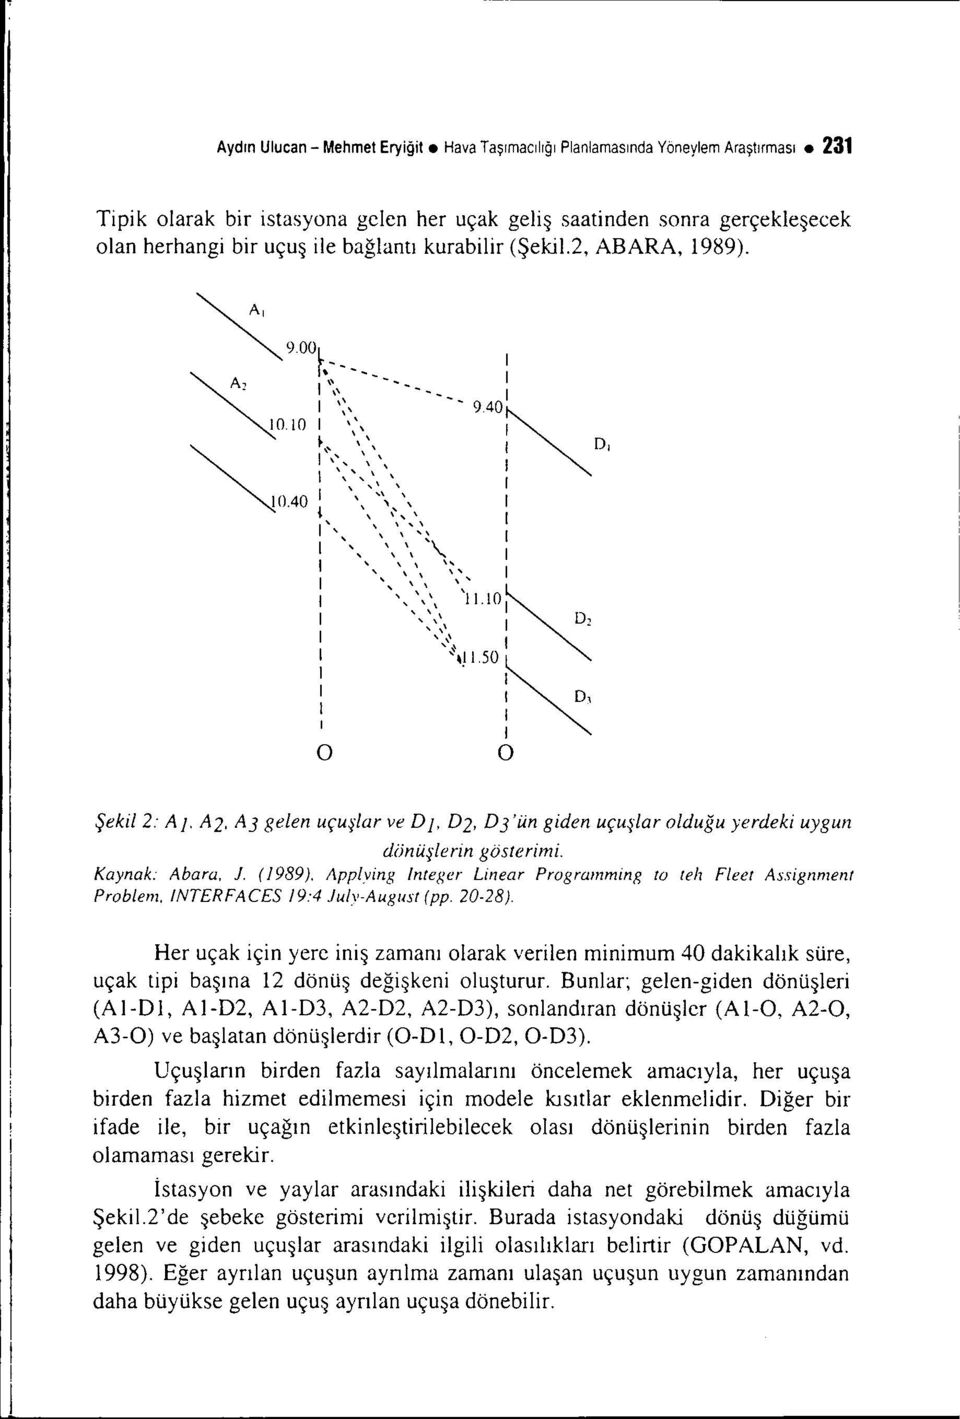 Applving Integer Linear ProgramminE: to te/ı Fleet Assignmenı Problem, INTERFACES 19:4 Ju/y-August (pp. 20-28).